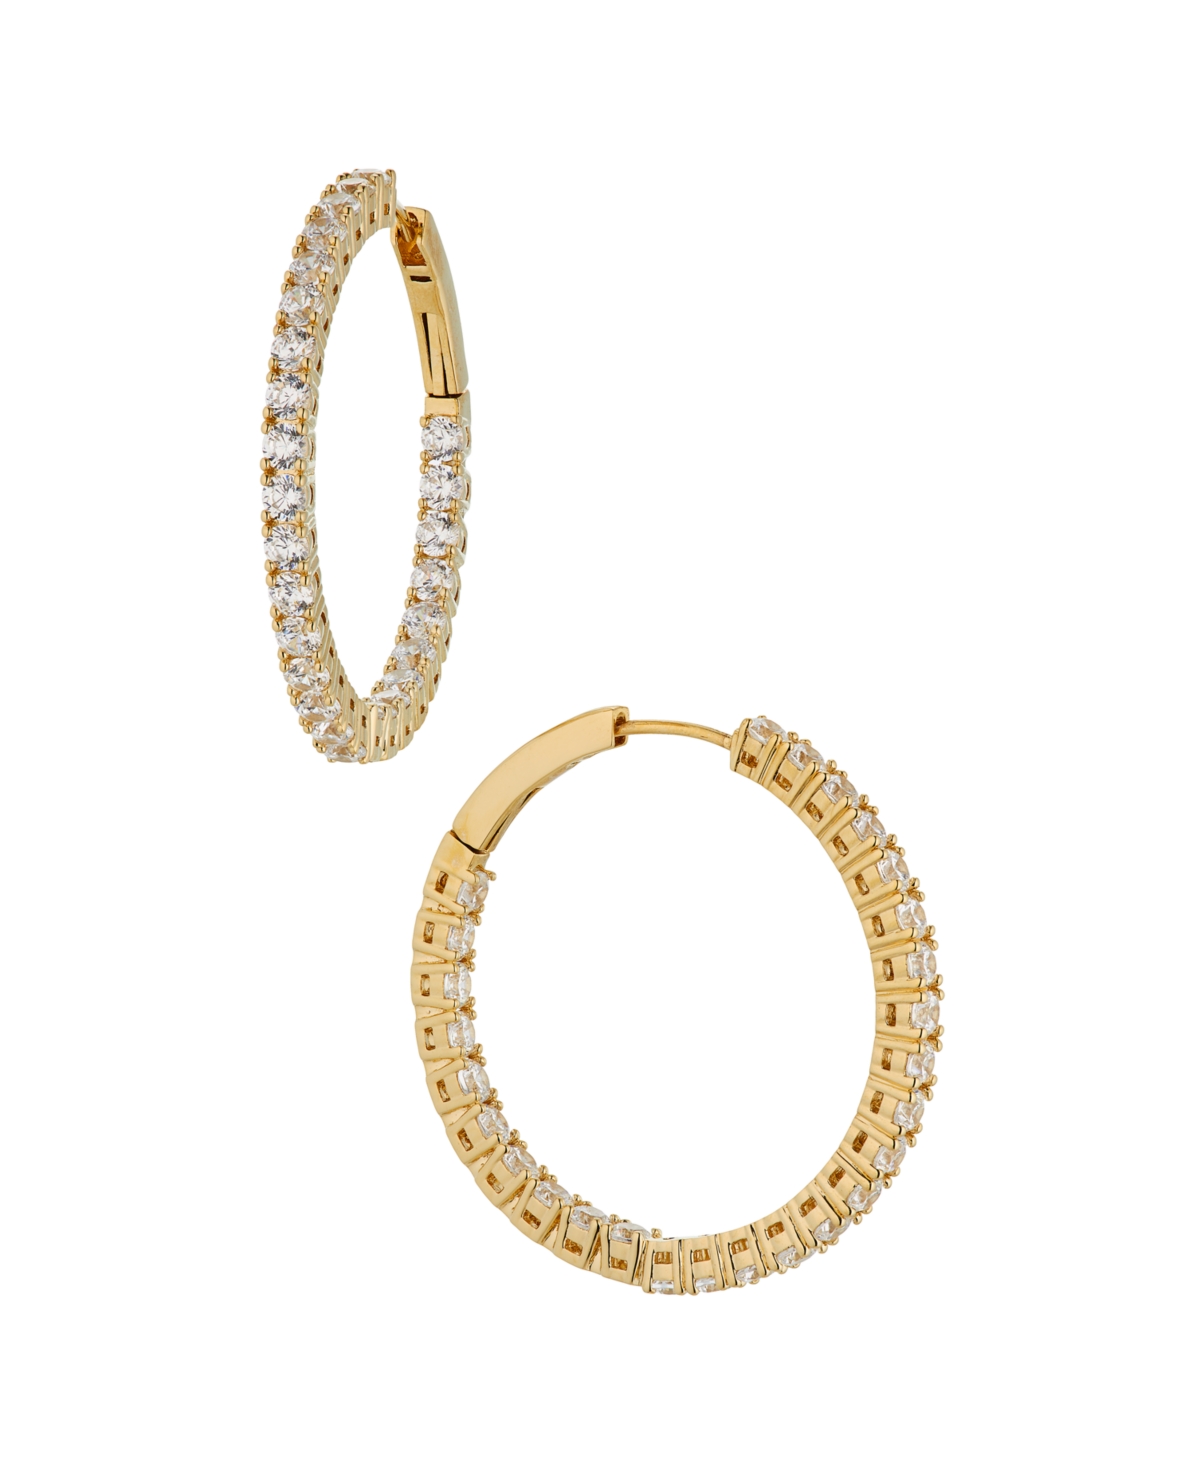 Cubic Zirconia Medium Hoop Earrings, Created for Macy's - Gold